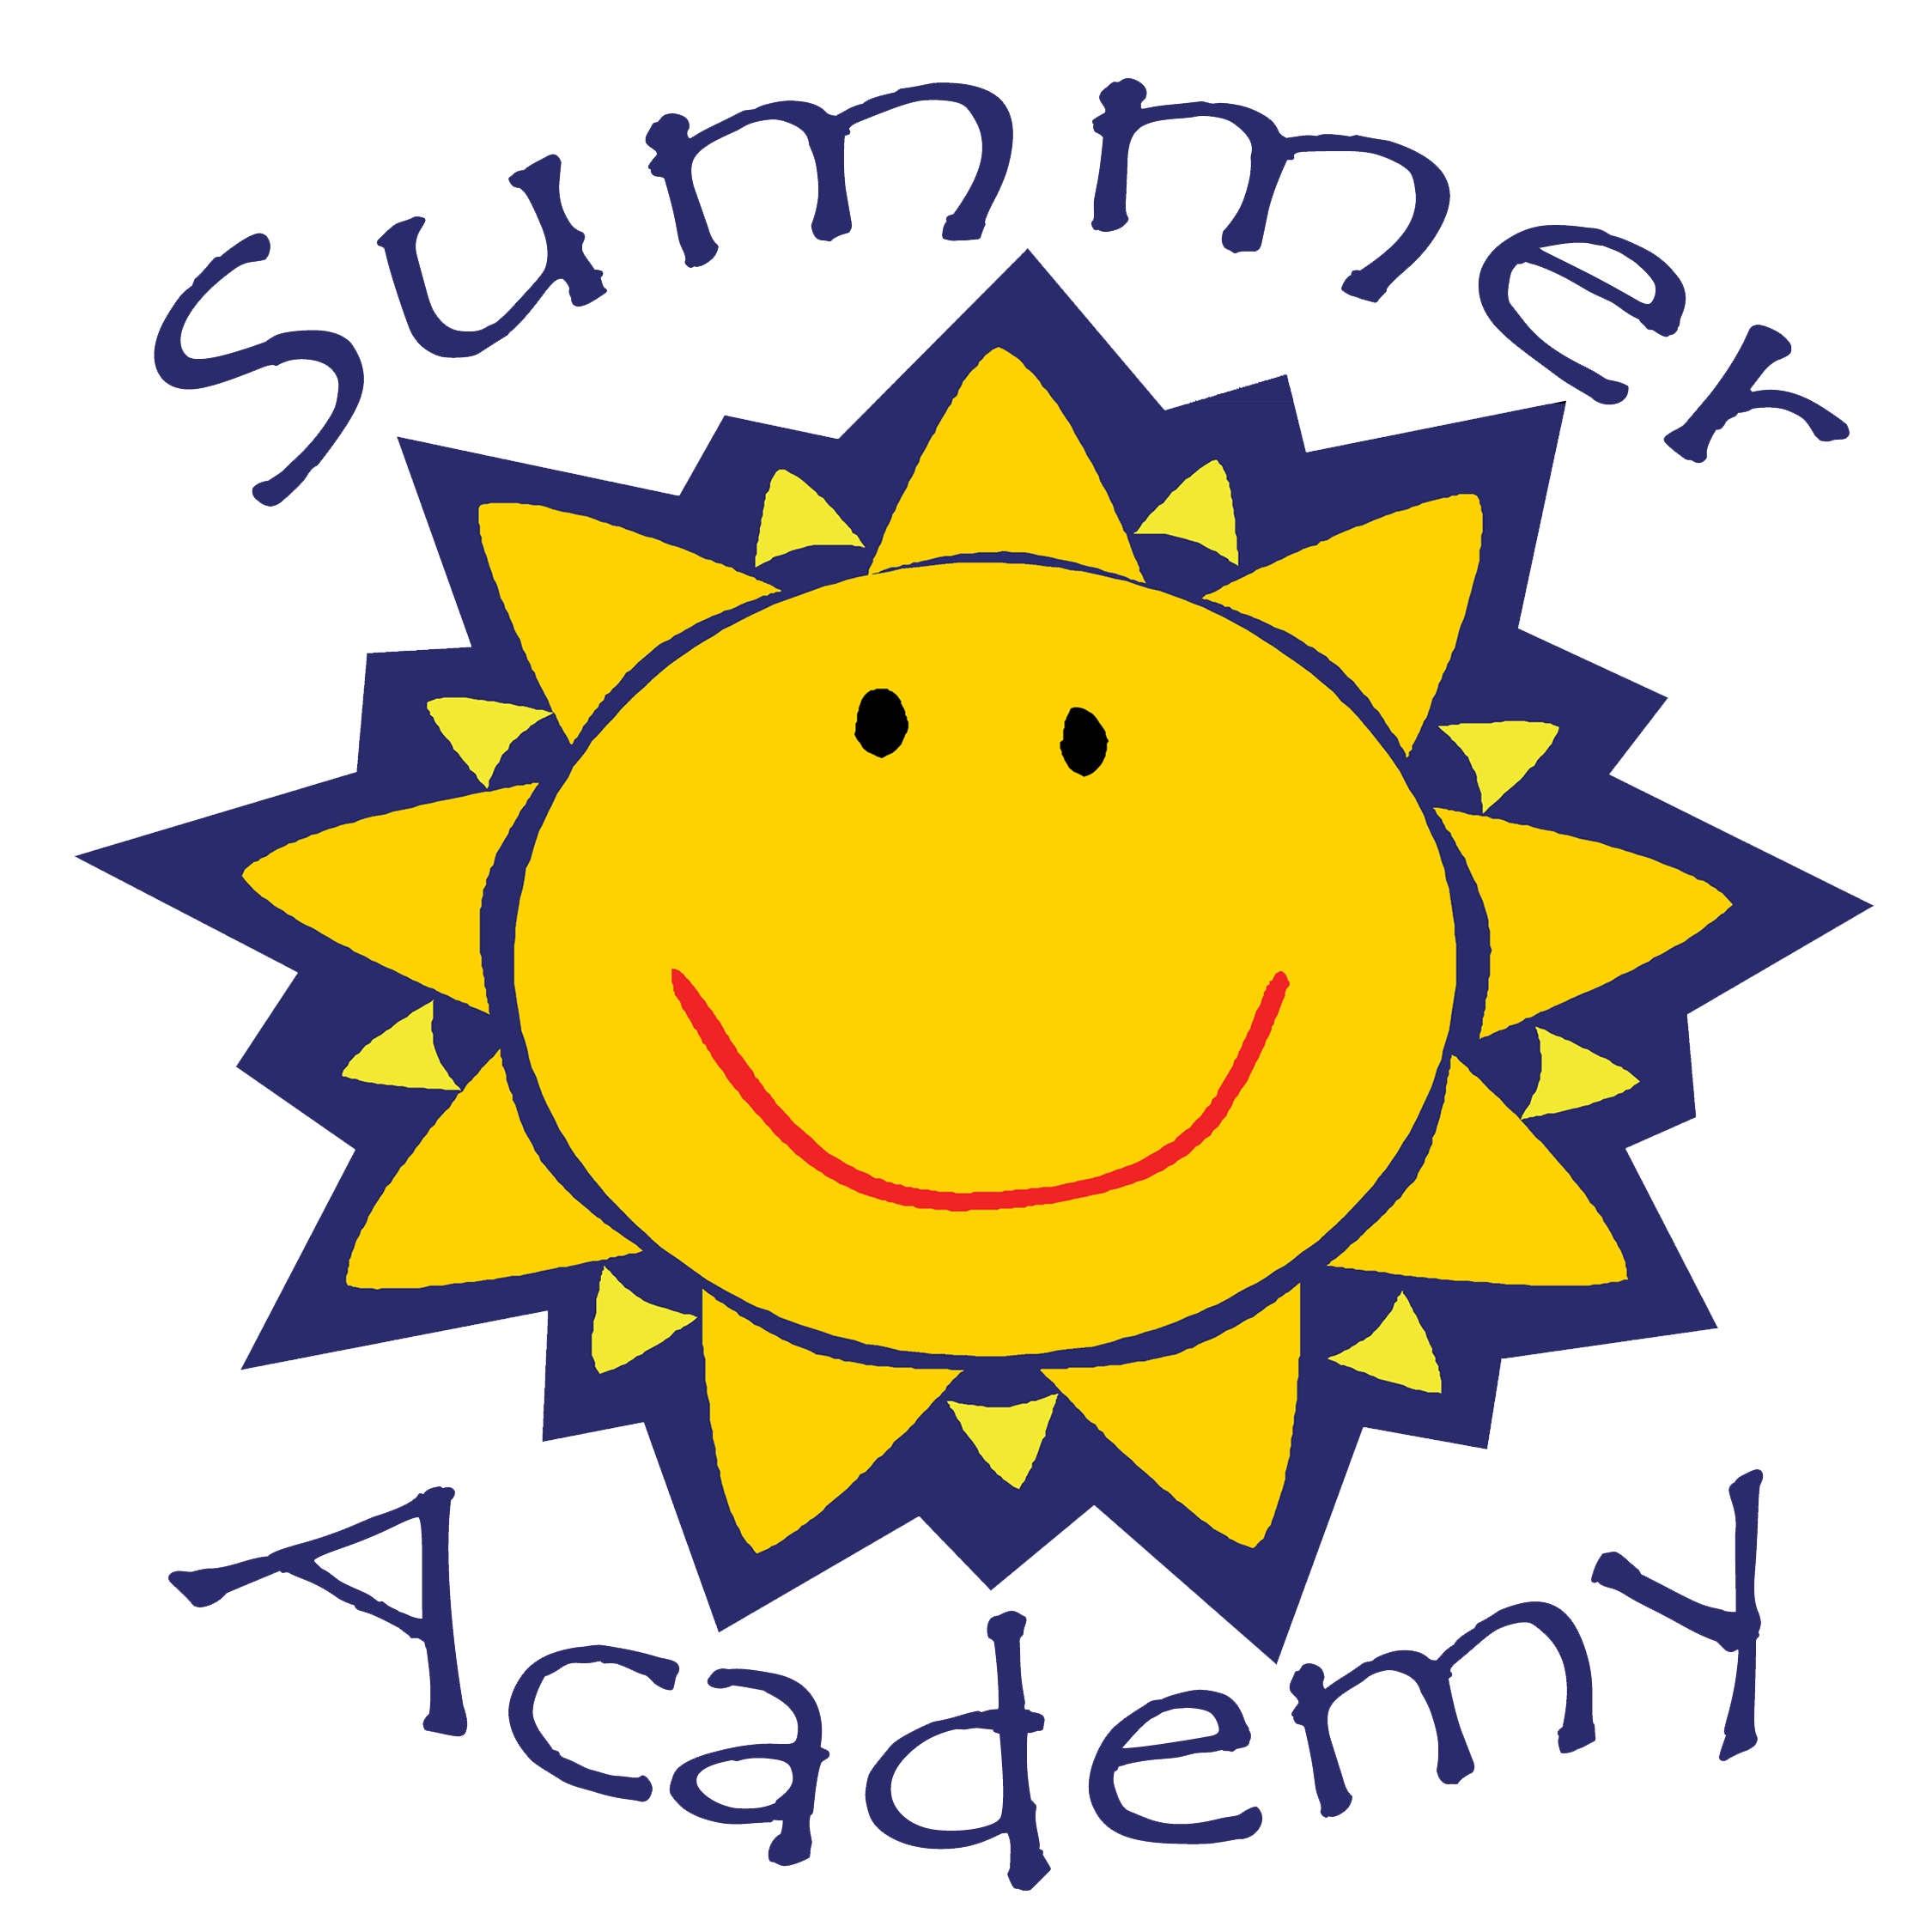 Summer Academy begins May 28!